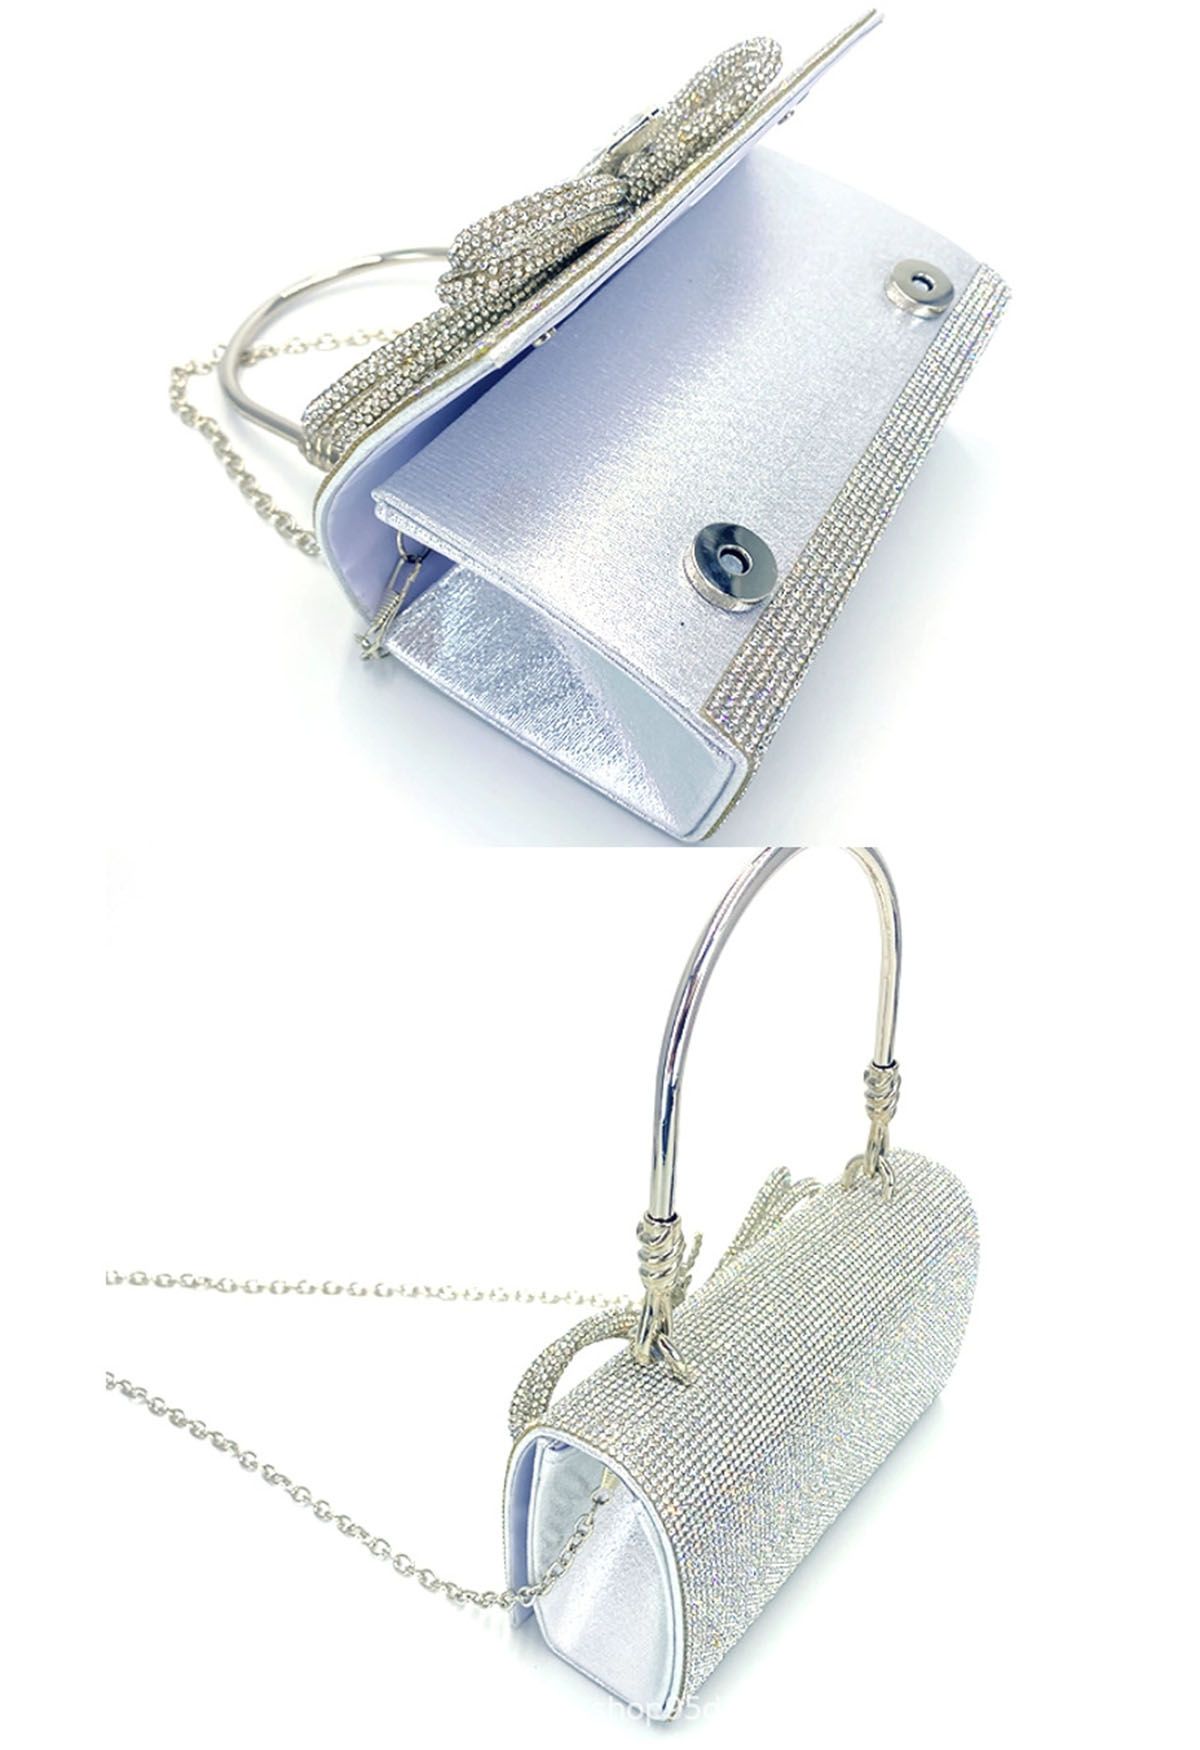 Lavish Butterfly Rhinestone Handbag in Silver